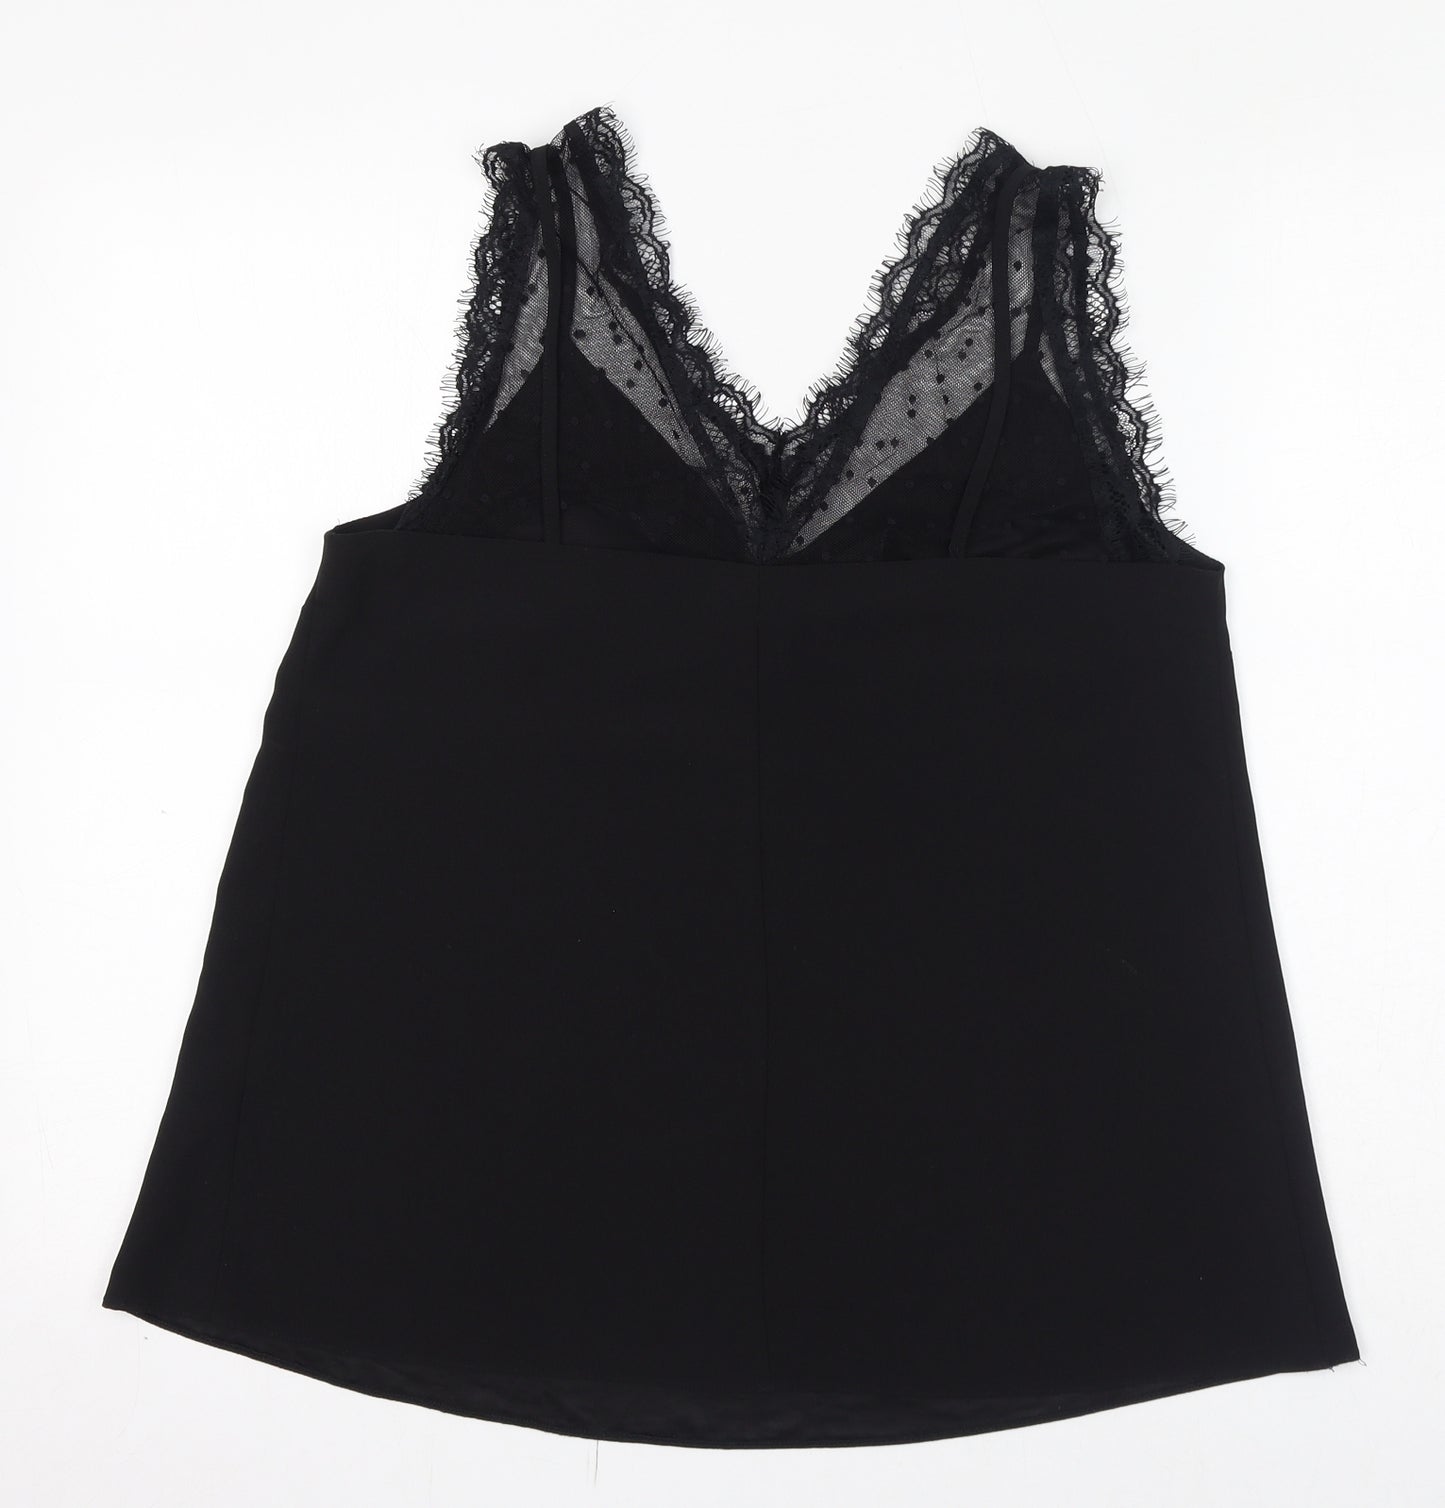 ASOS Womens Black Polyester Basic Tank Size 10 V-Neck - Lace Trim Detail